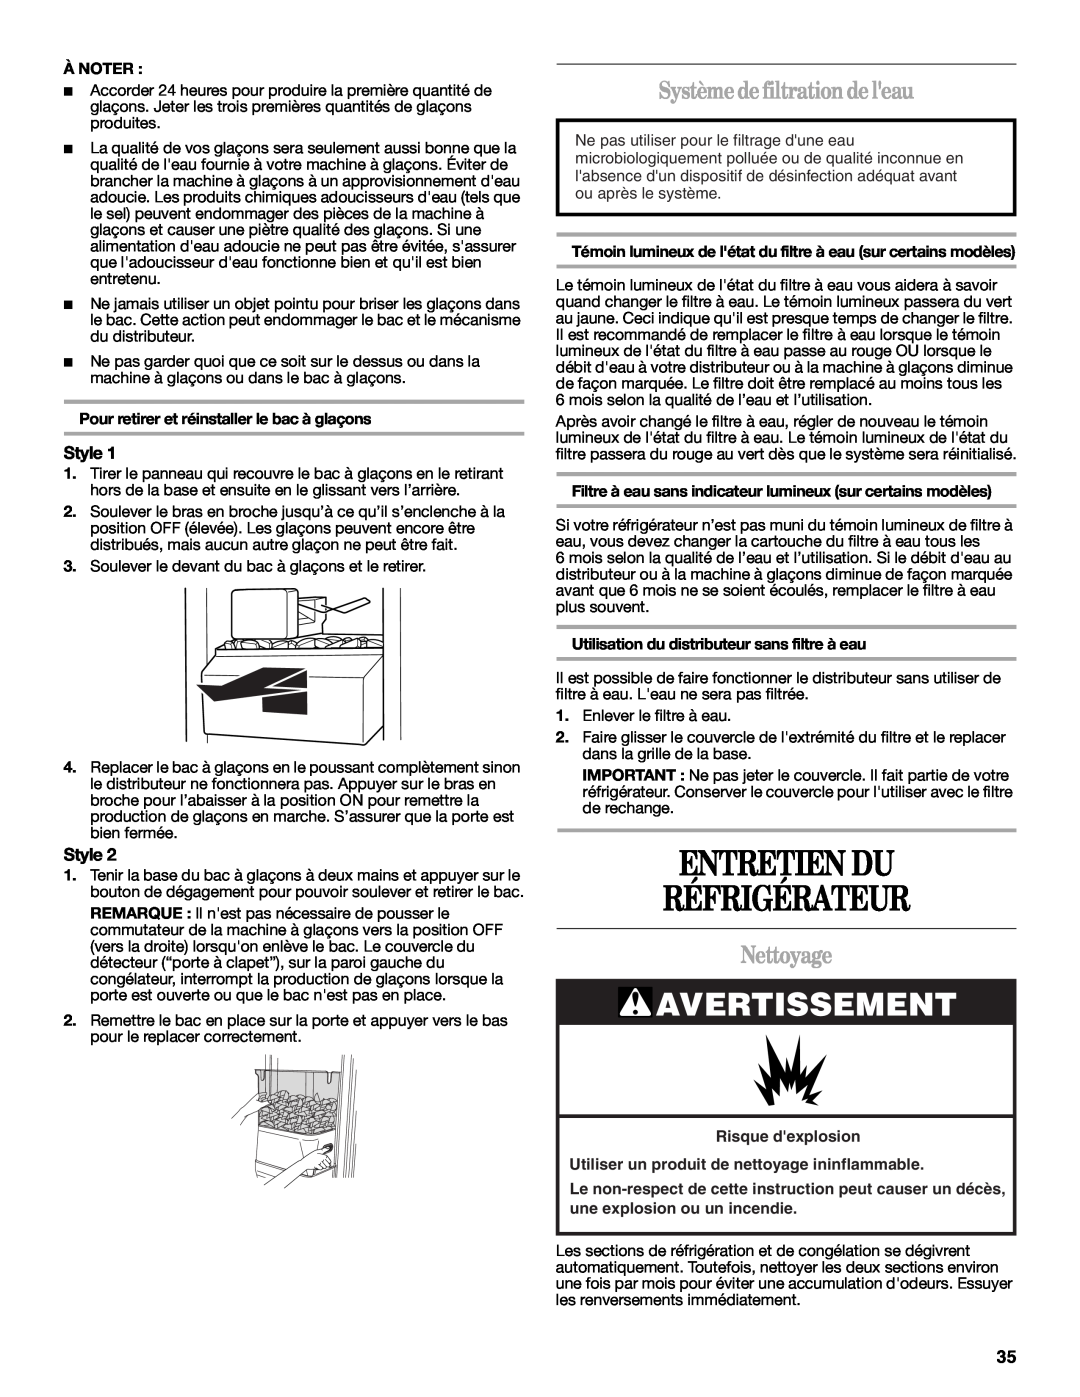 Whirlpool ED5LVAXV warranty Entretien Du Réfrigérateur, Systèmedefiltrationdeleau, Nettoyage, À Noter, Avertissement, Style 